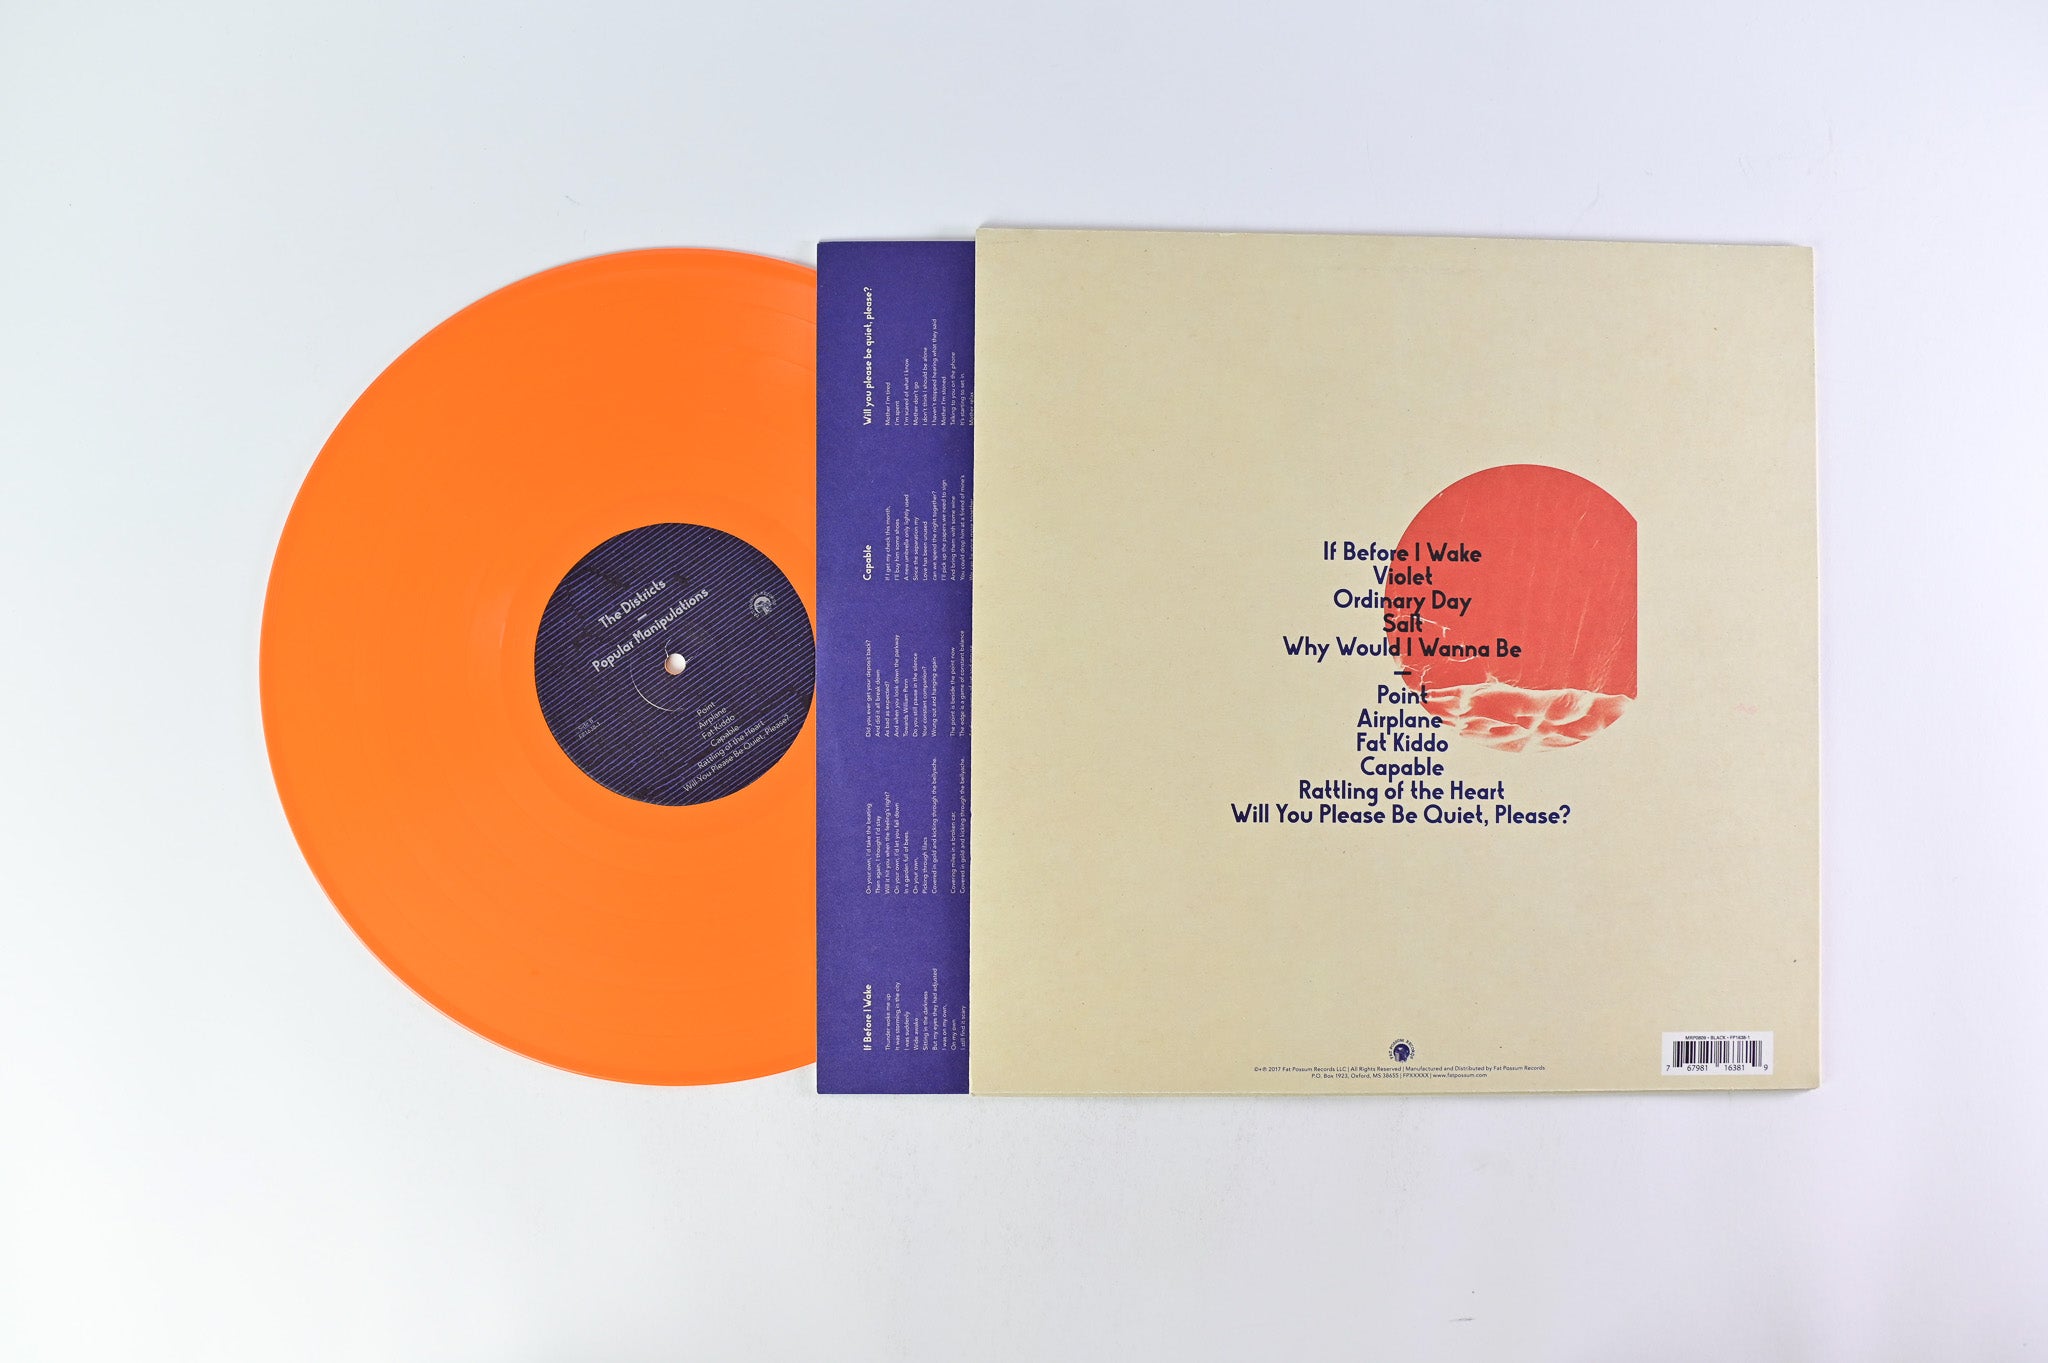 The Districts - Popular Manipulations on Fat Possum Records - Orange Vinyl